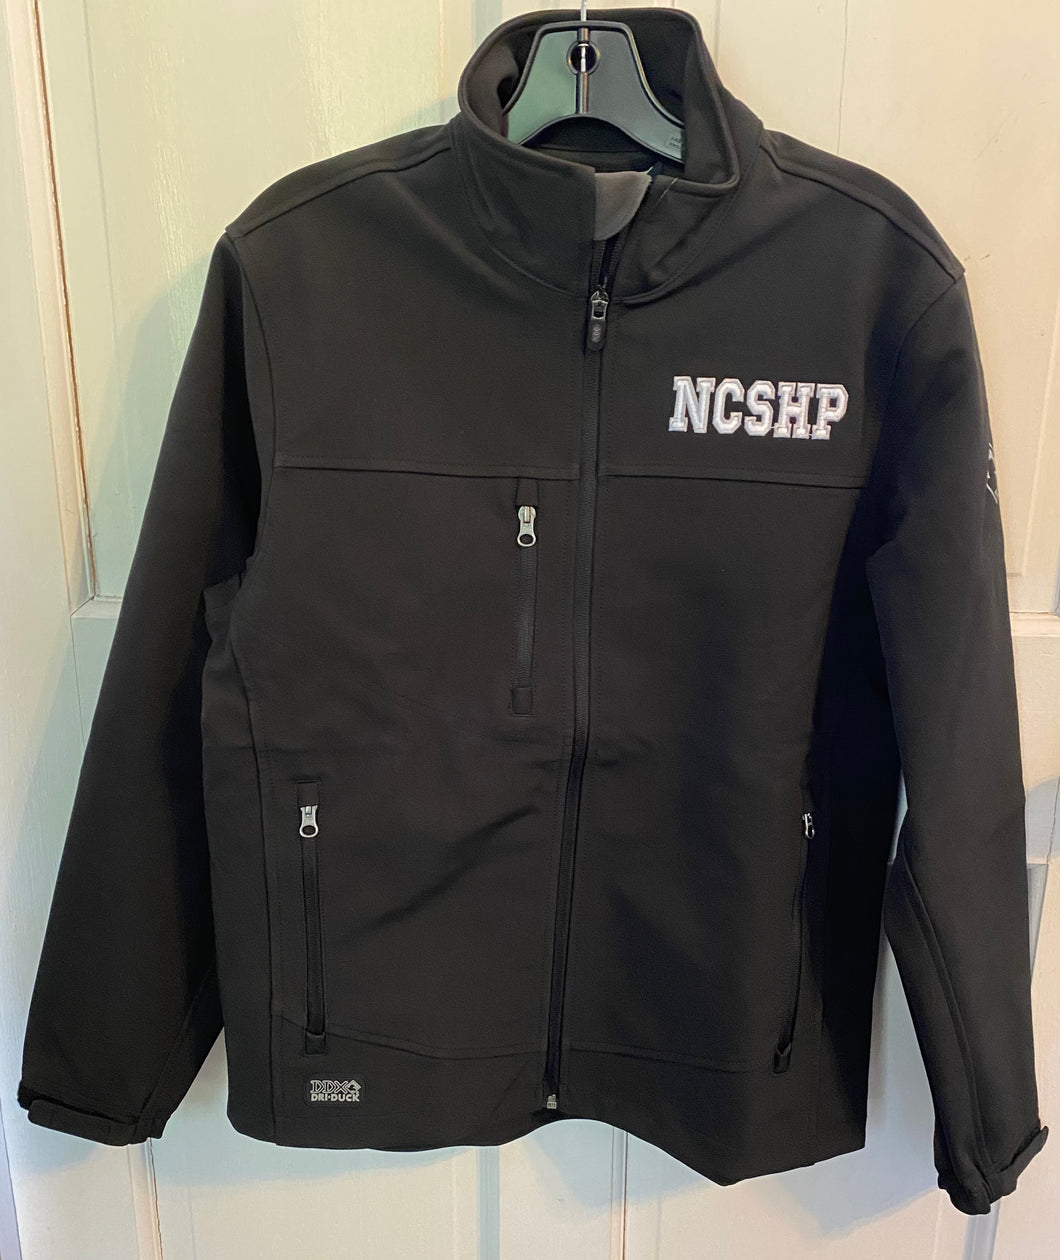 NCSHP Dri Duck Soft Shell Jacket